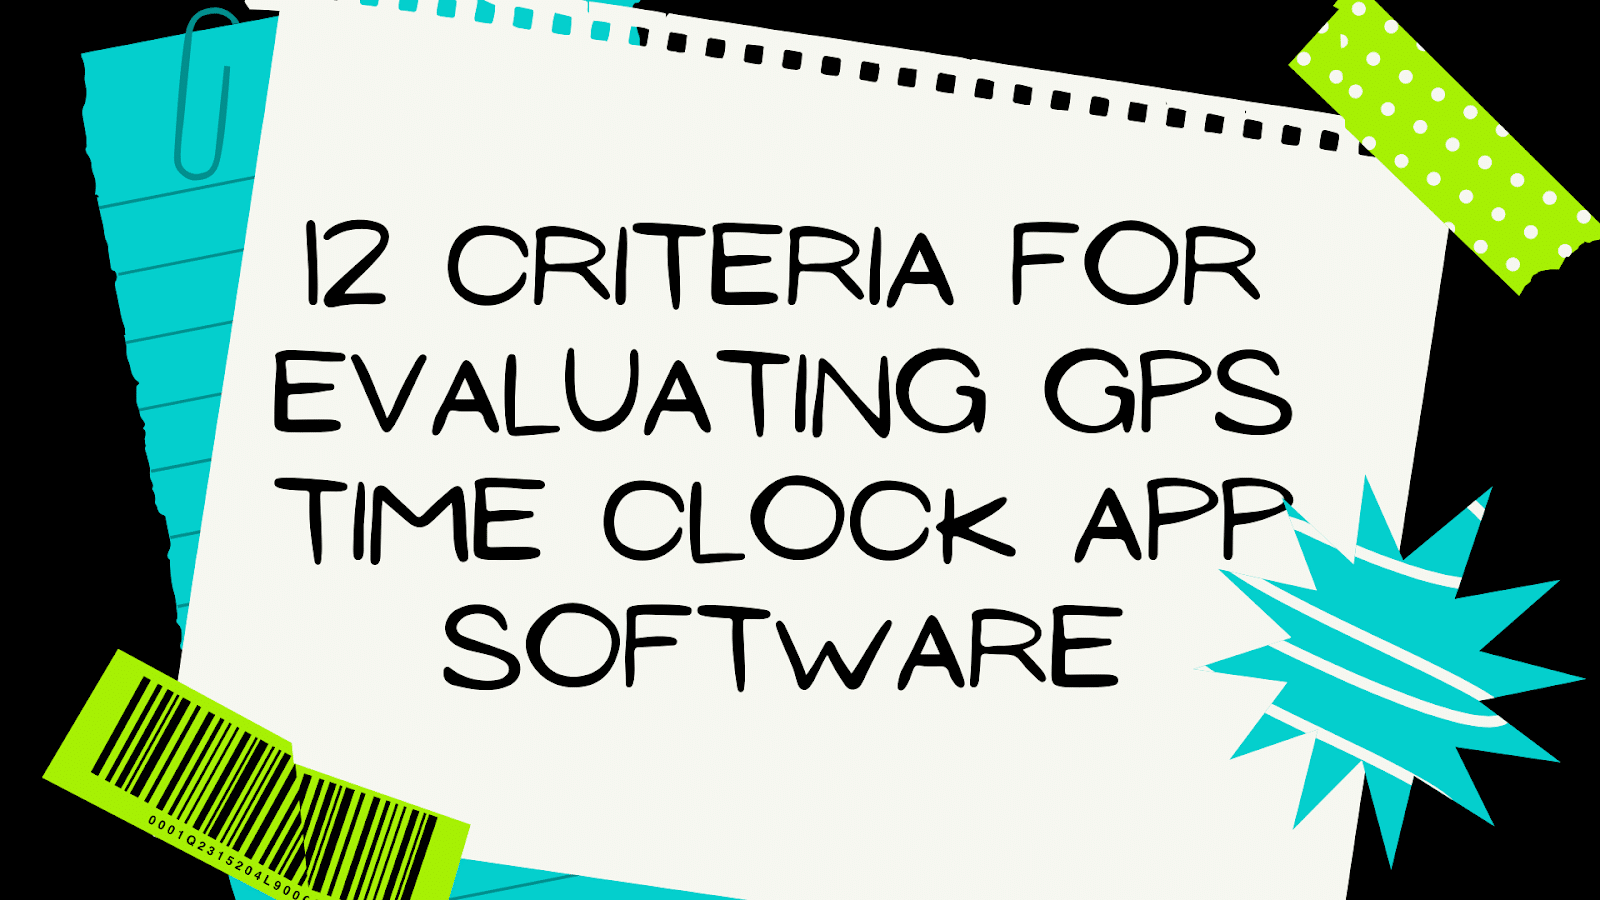 GPS Clock App criteria